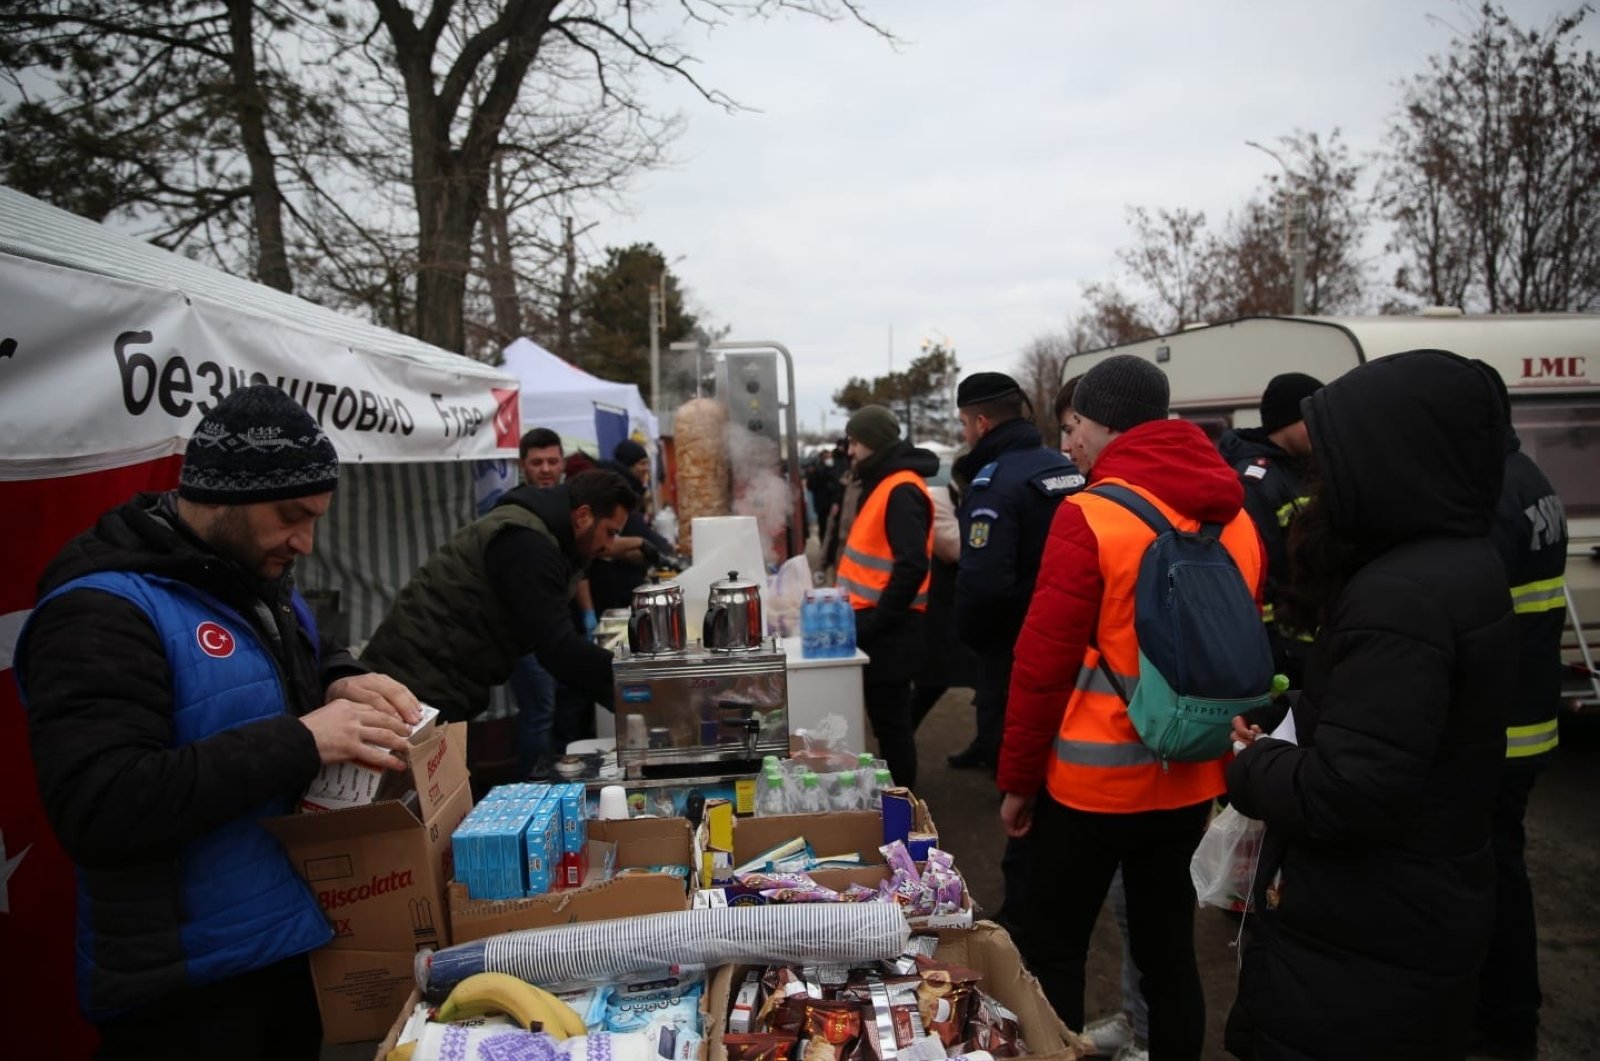 Ajutorul umanitar din Turcia ajunge în Ucraina, Moldova, România